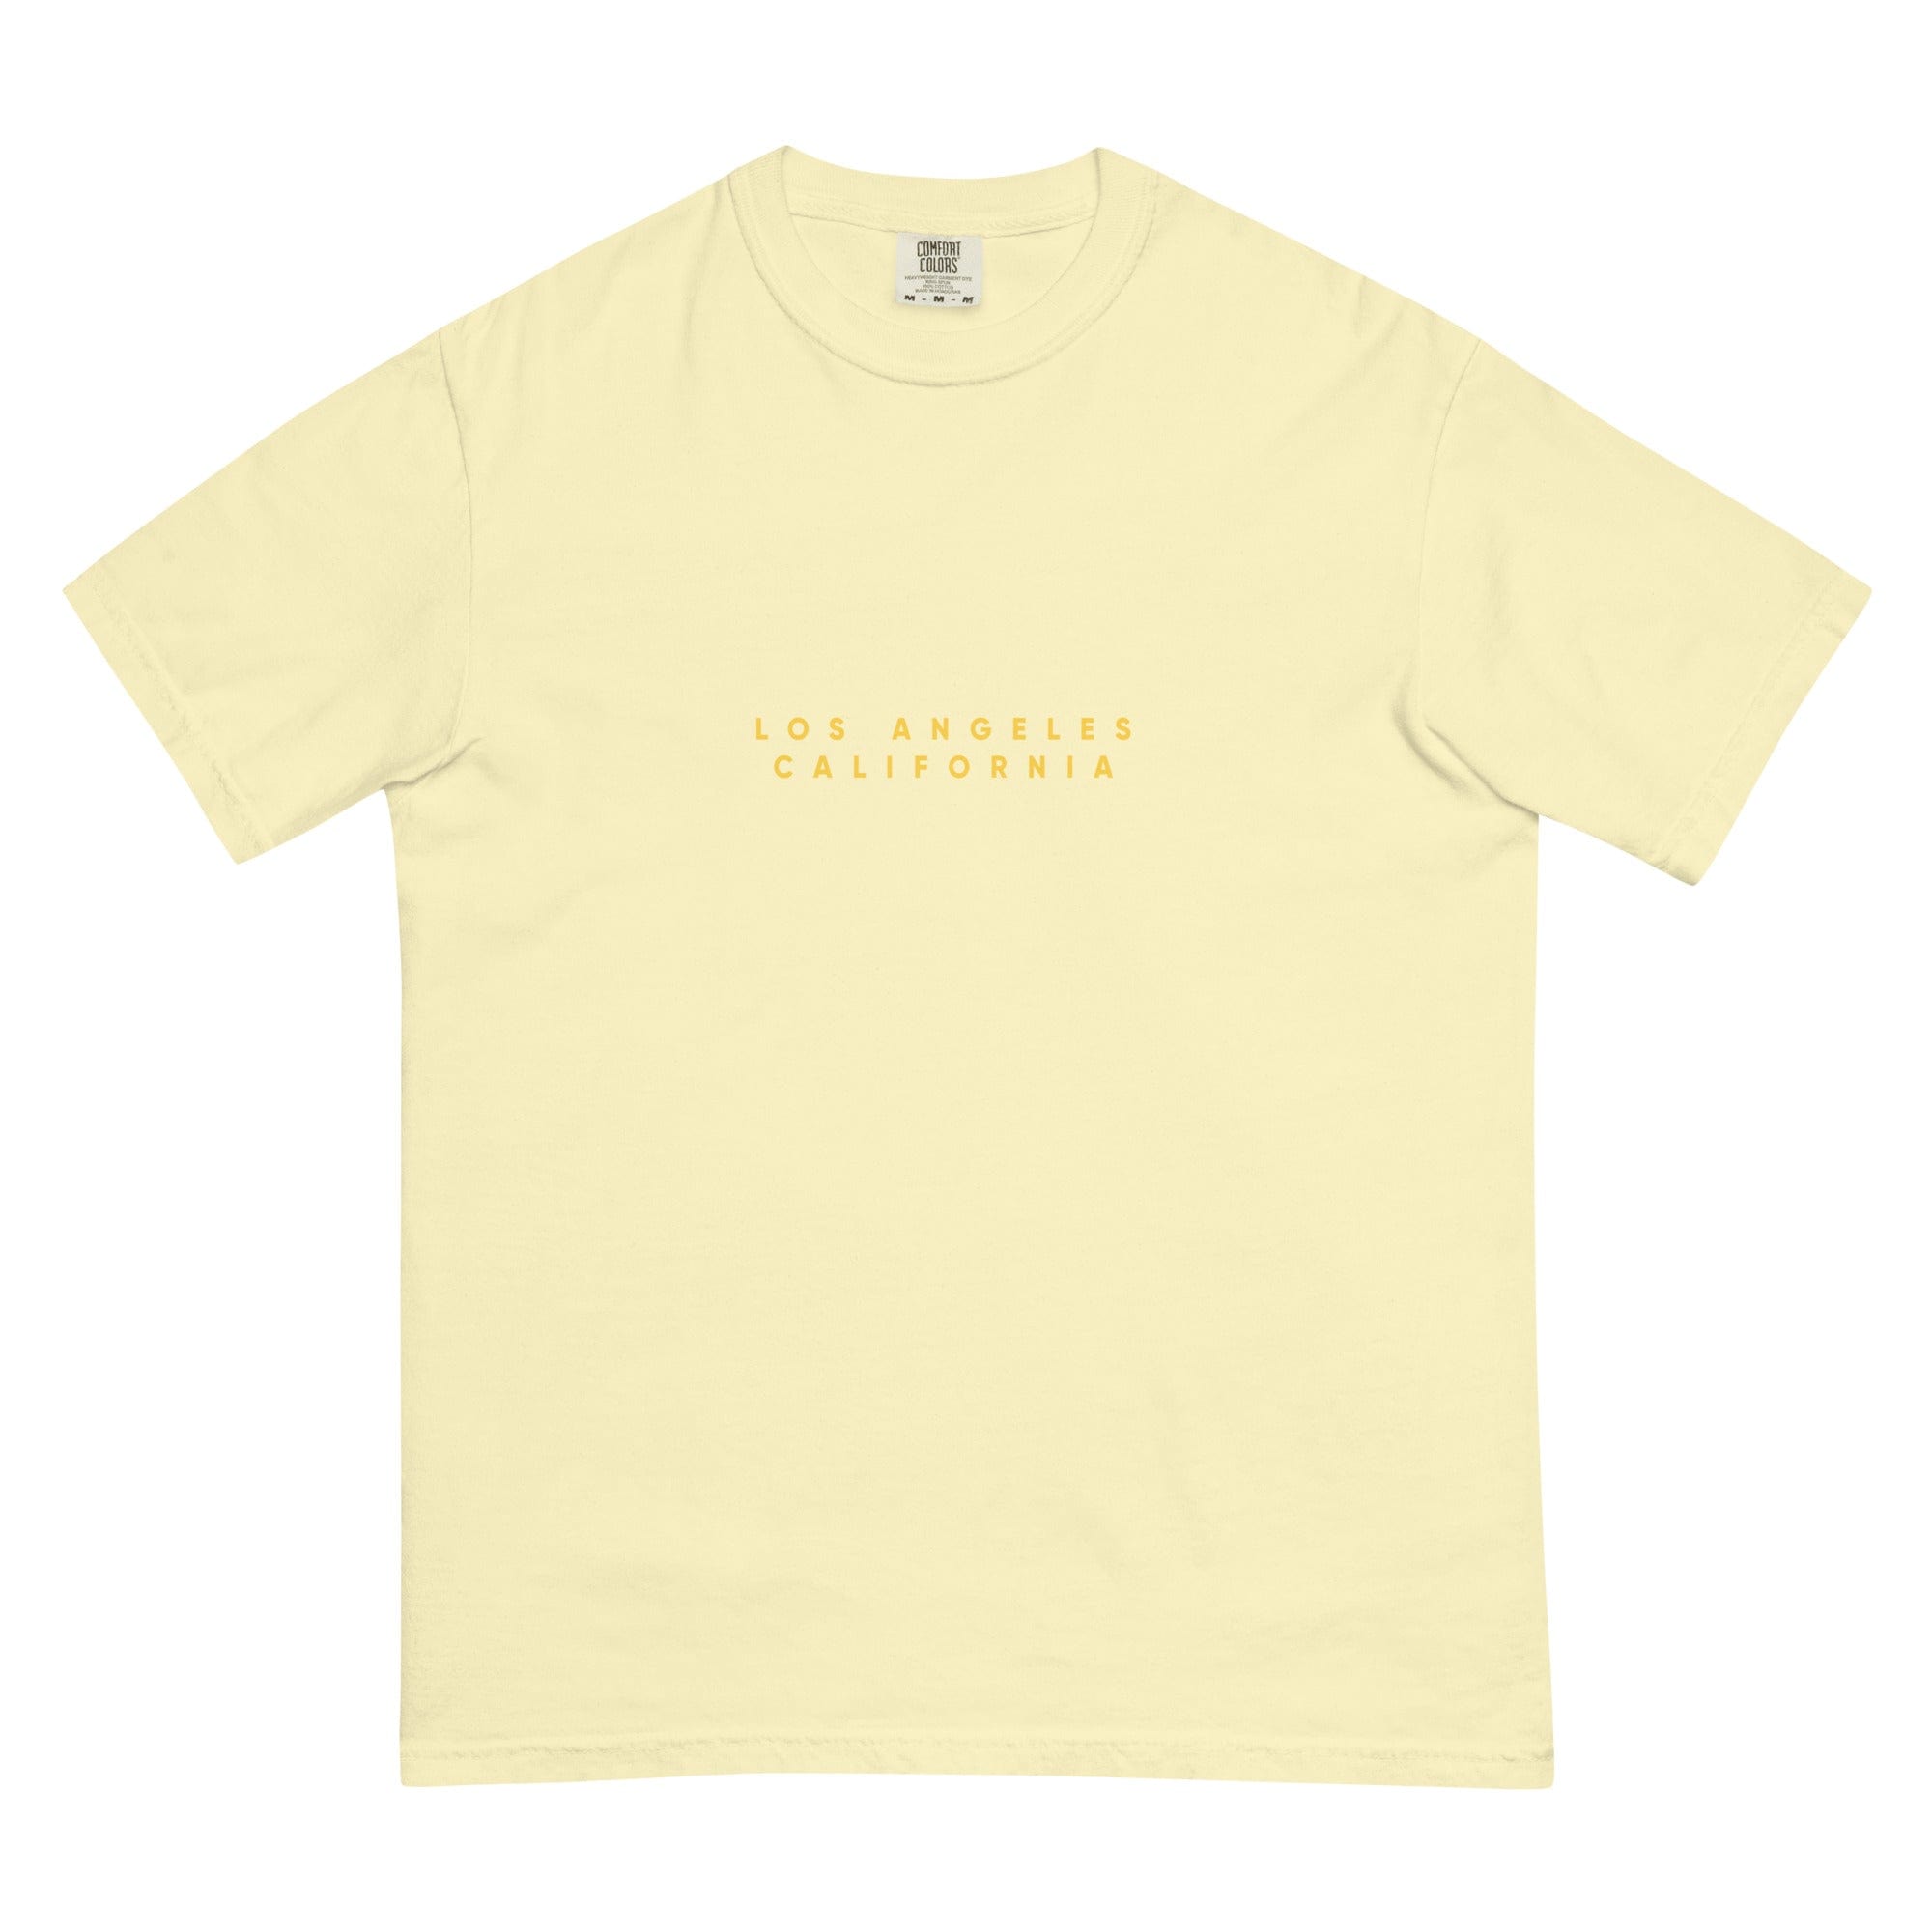 City Shirt Co Los Angeles Comfort Colors T-Shirt Butter / S